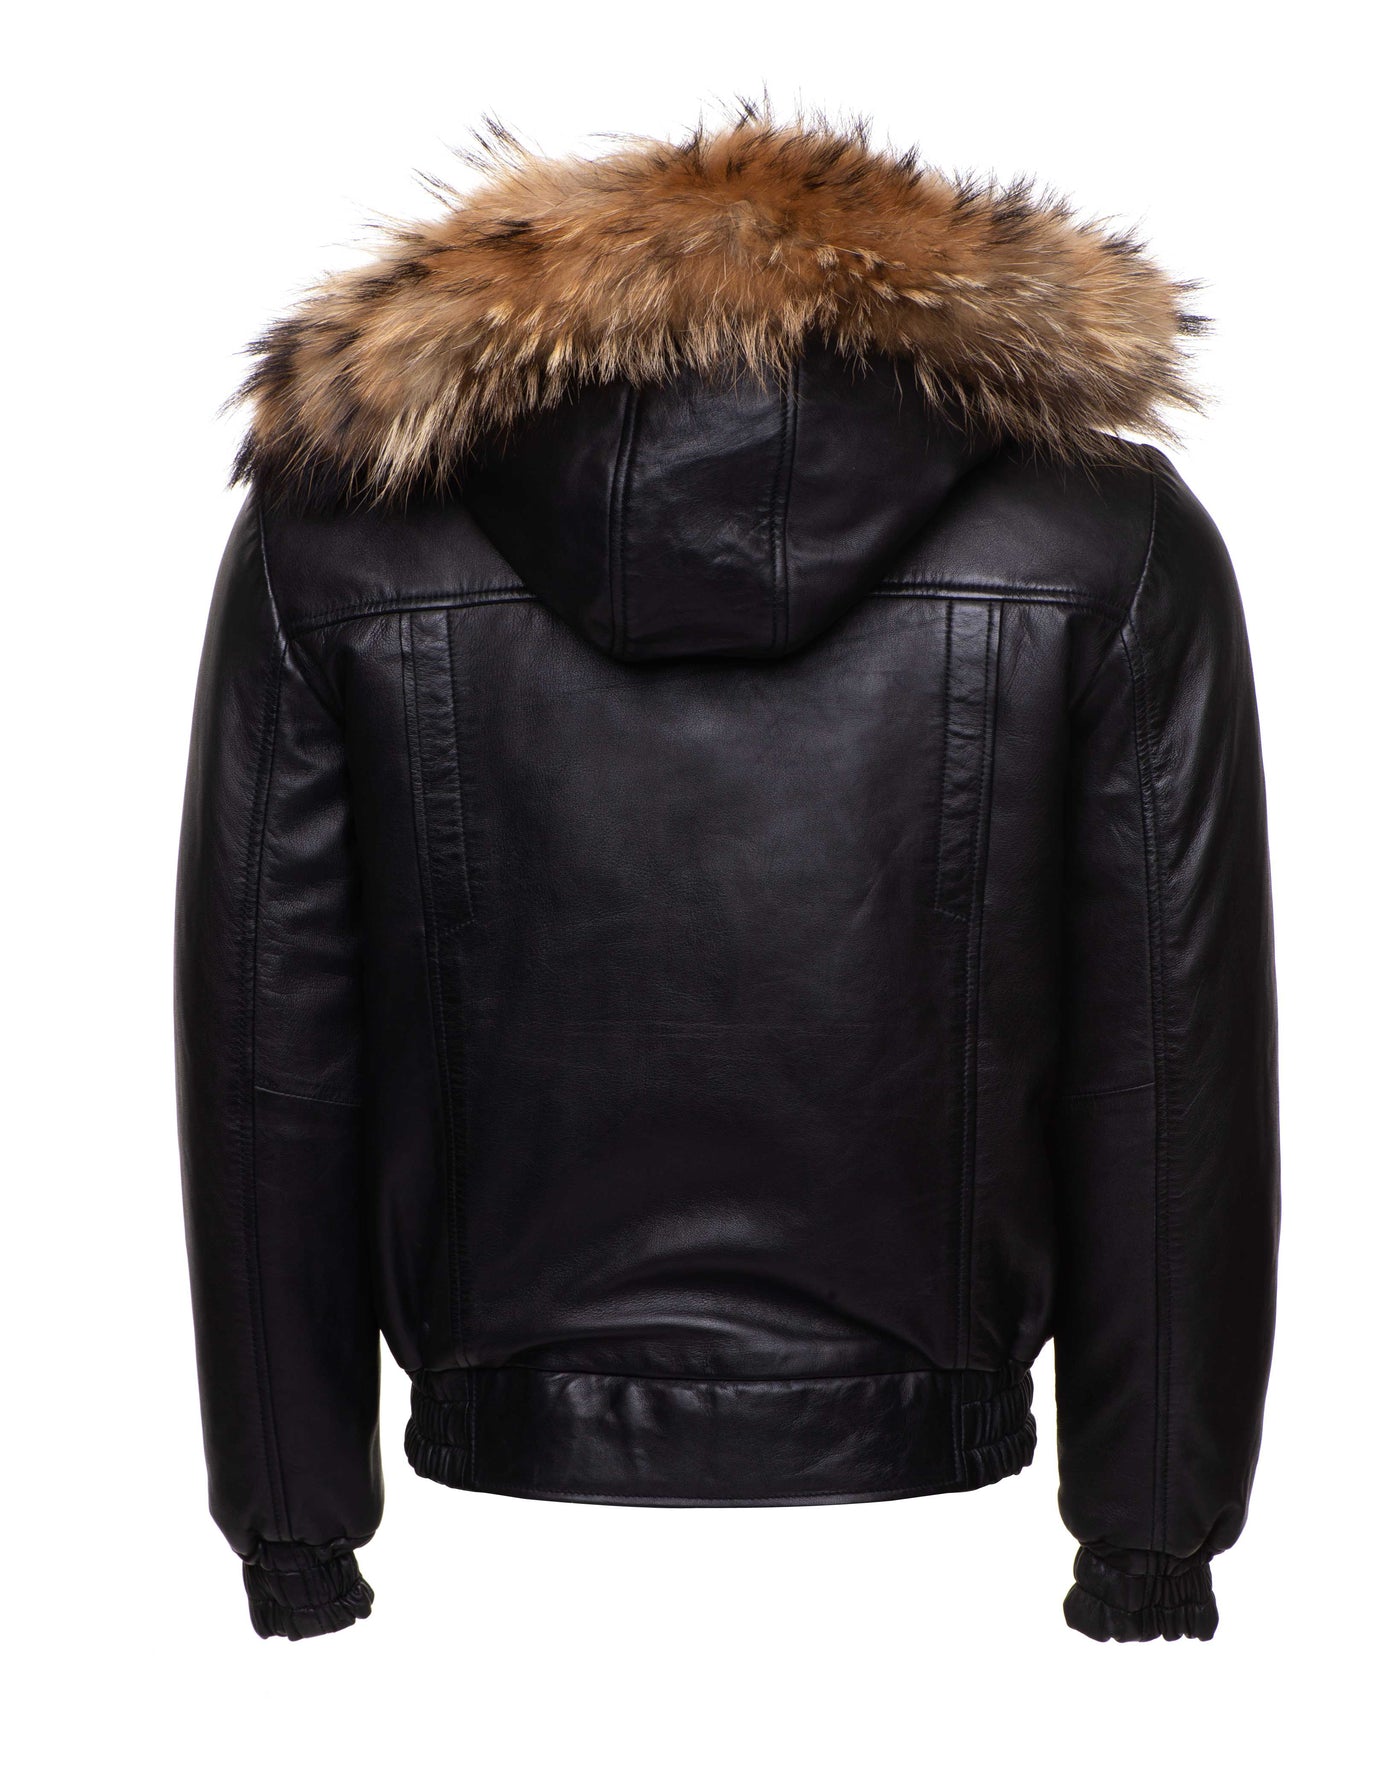 Safe Winter Castillos bomber Jacket with Real fox fur hoodie